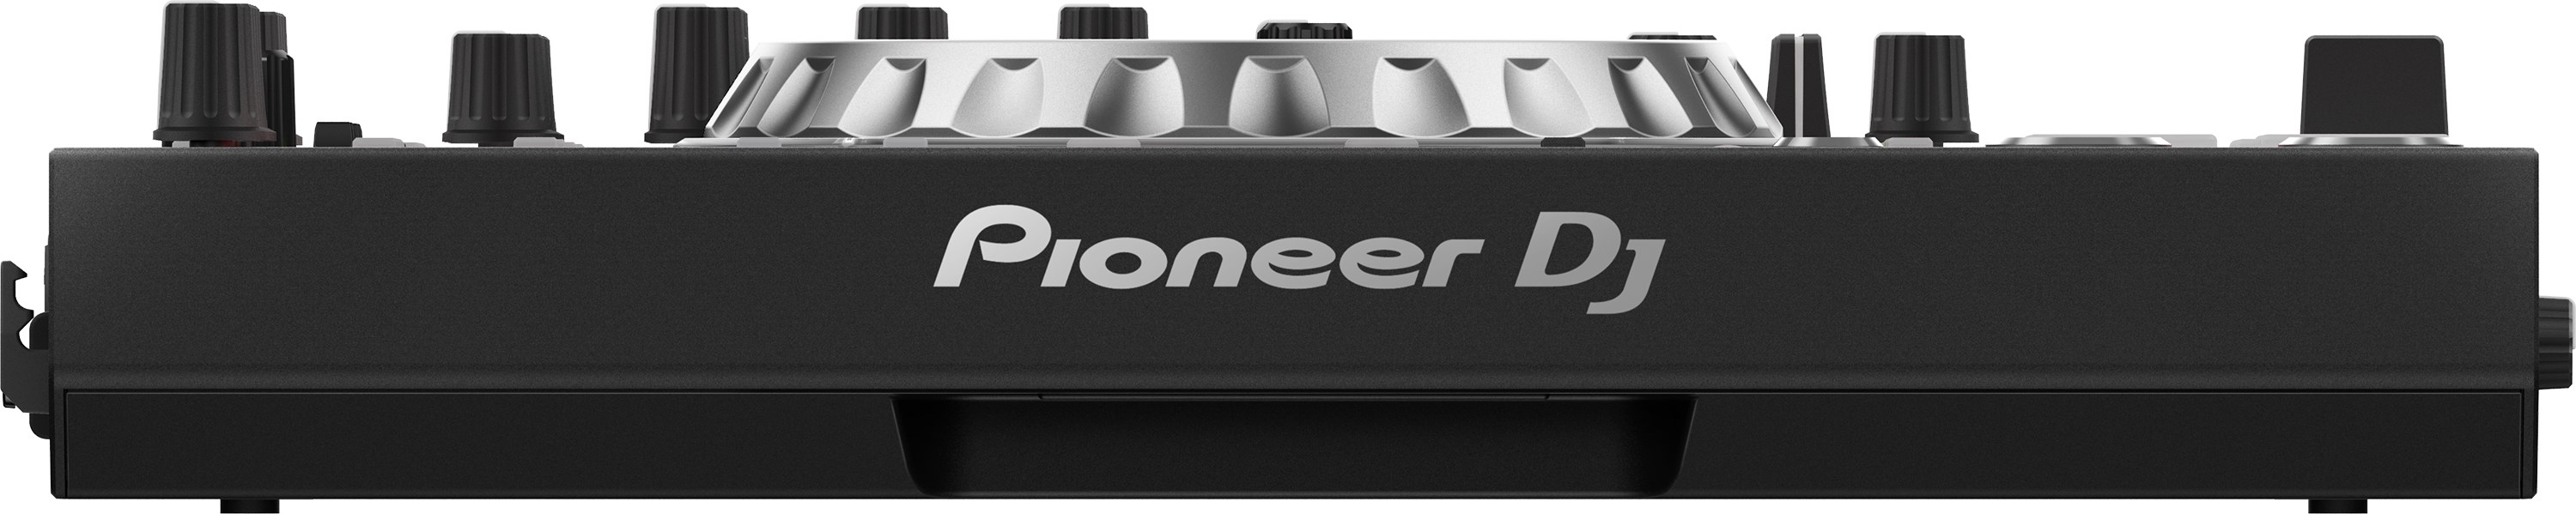 Pioneer Dj Ddj-sx3 - USB DJ-Controller - Variation 4